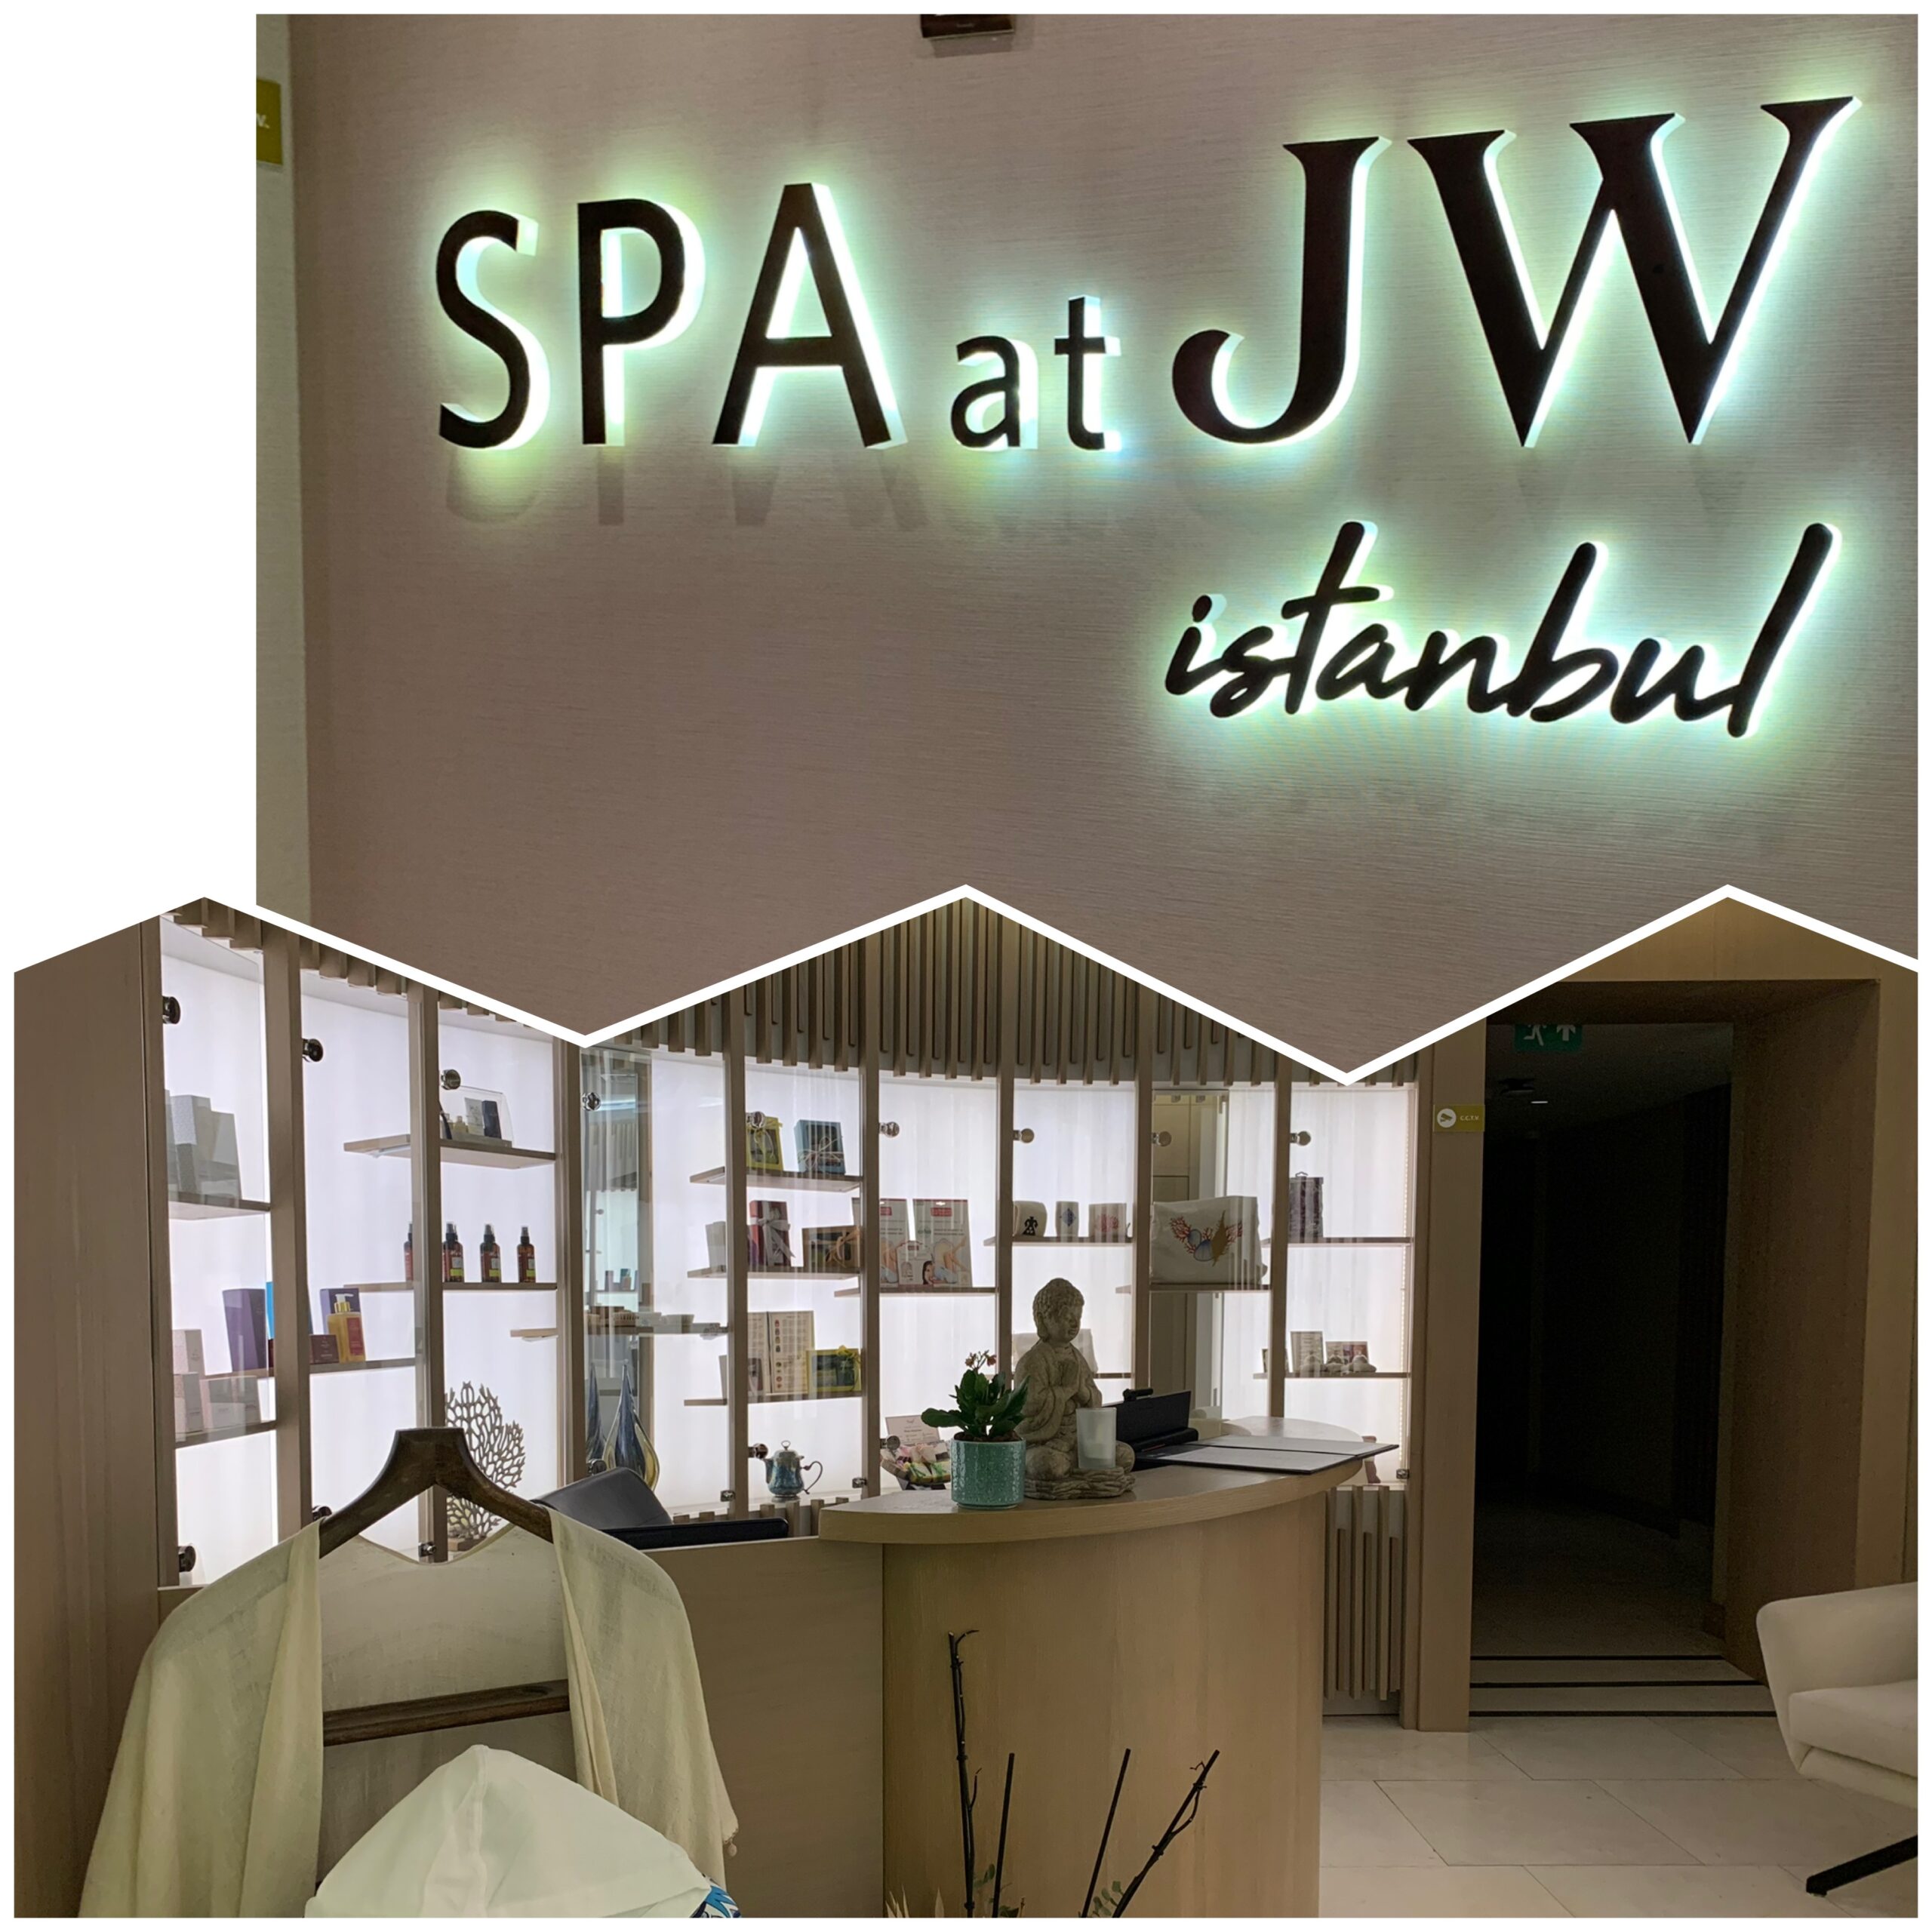 JW Marriott Istanbul Bosphorus - Spa at JW